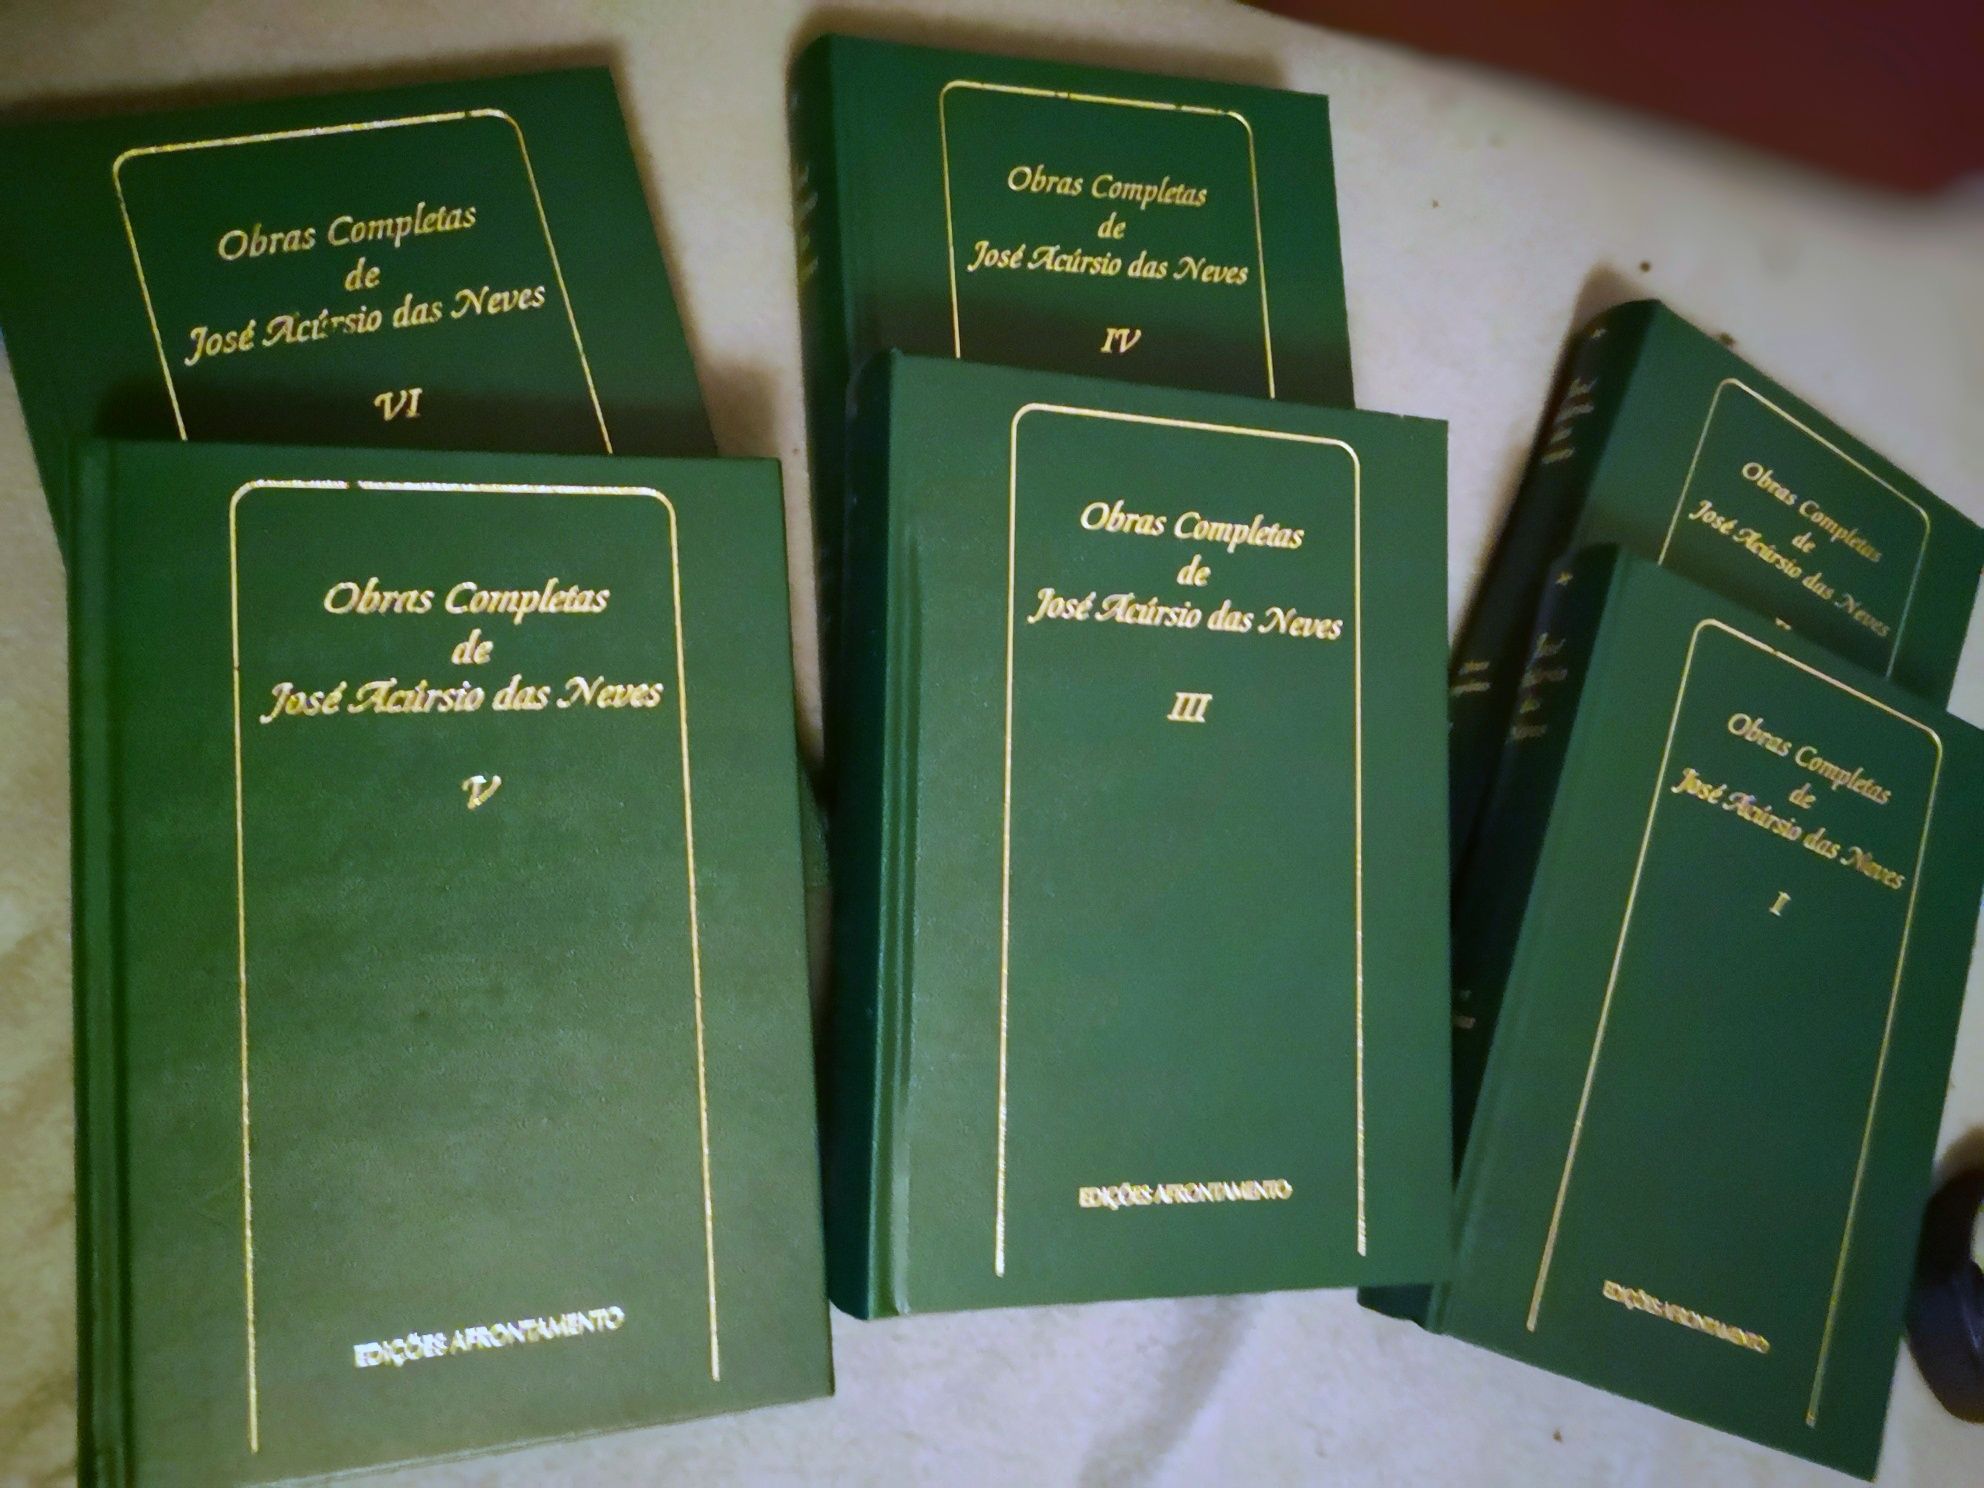 Acúrsio das Neves - obras completas, 6 volumes